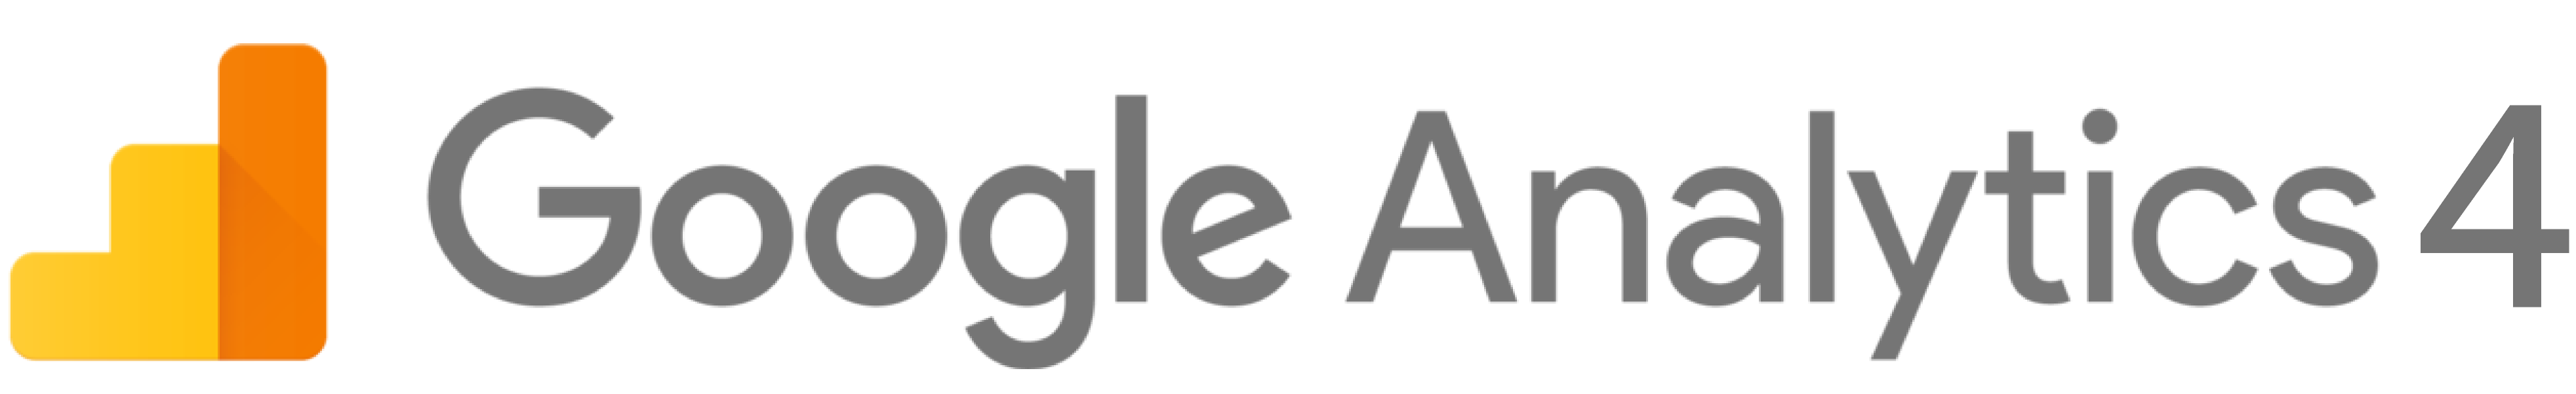 Google Analytics 4 Google Ads Report Template